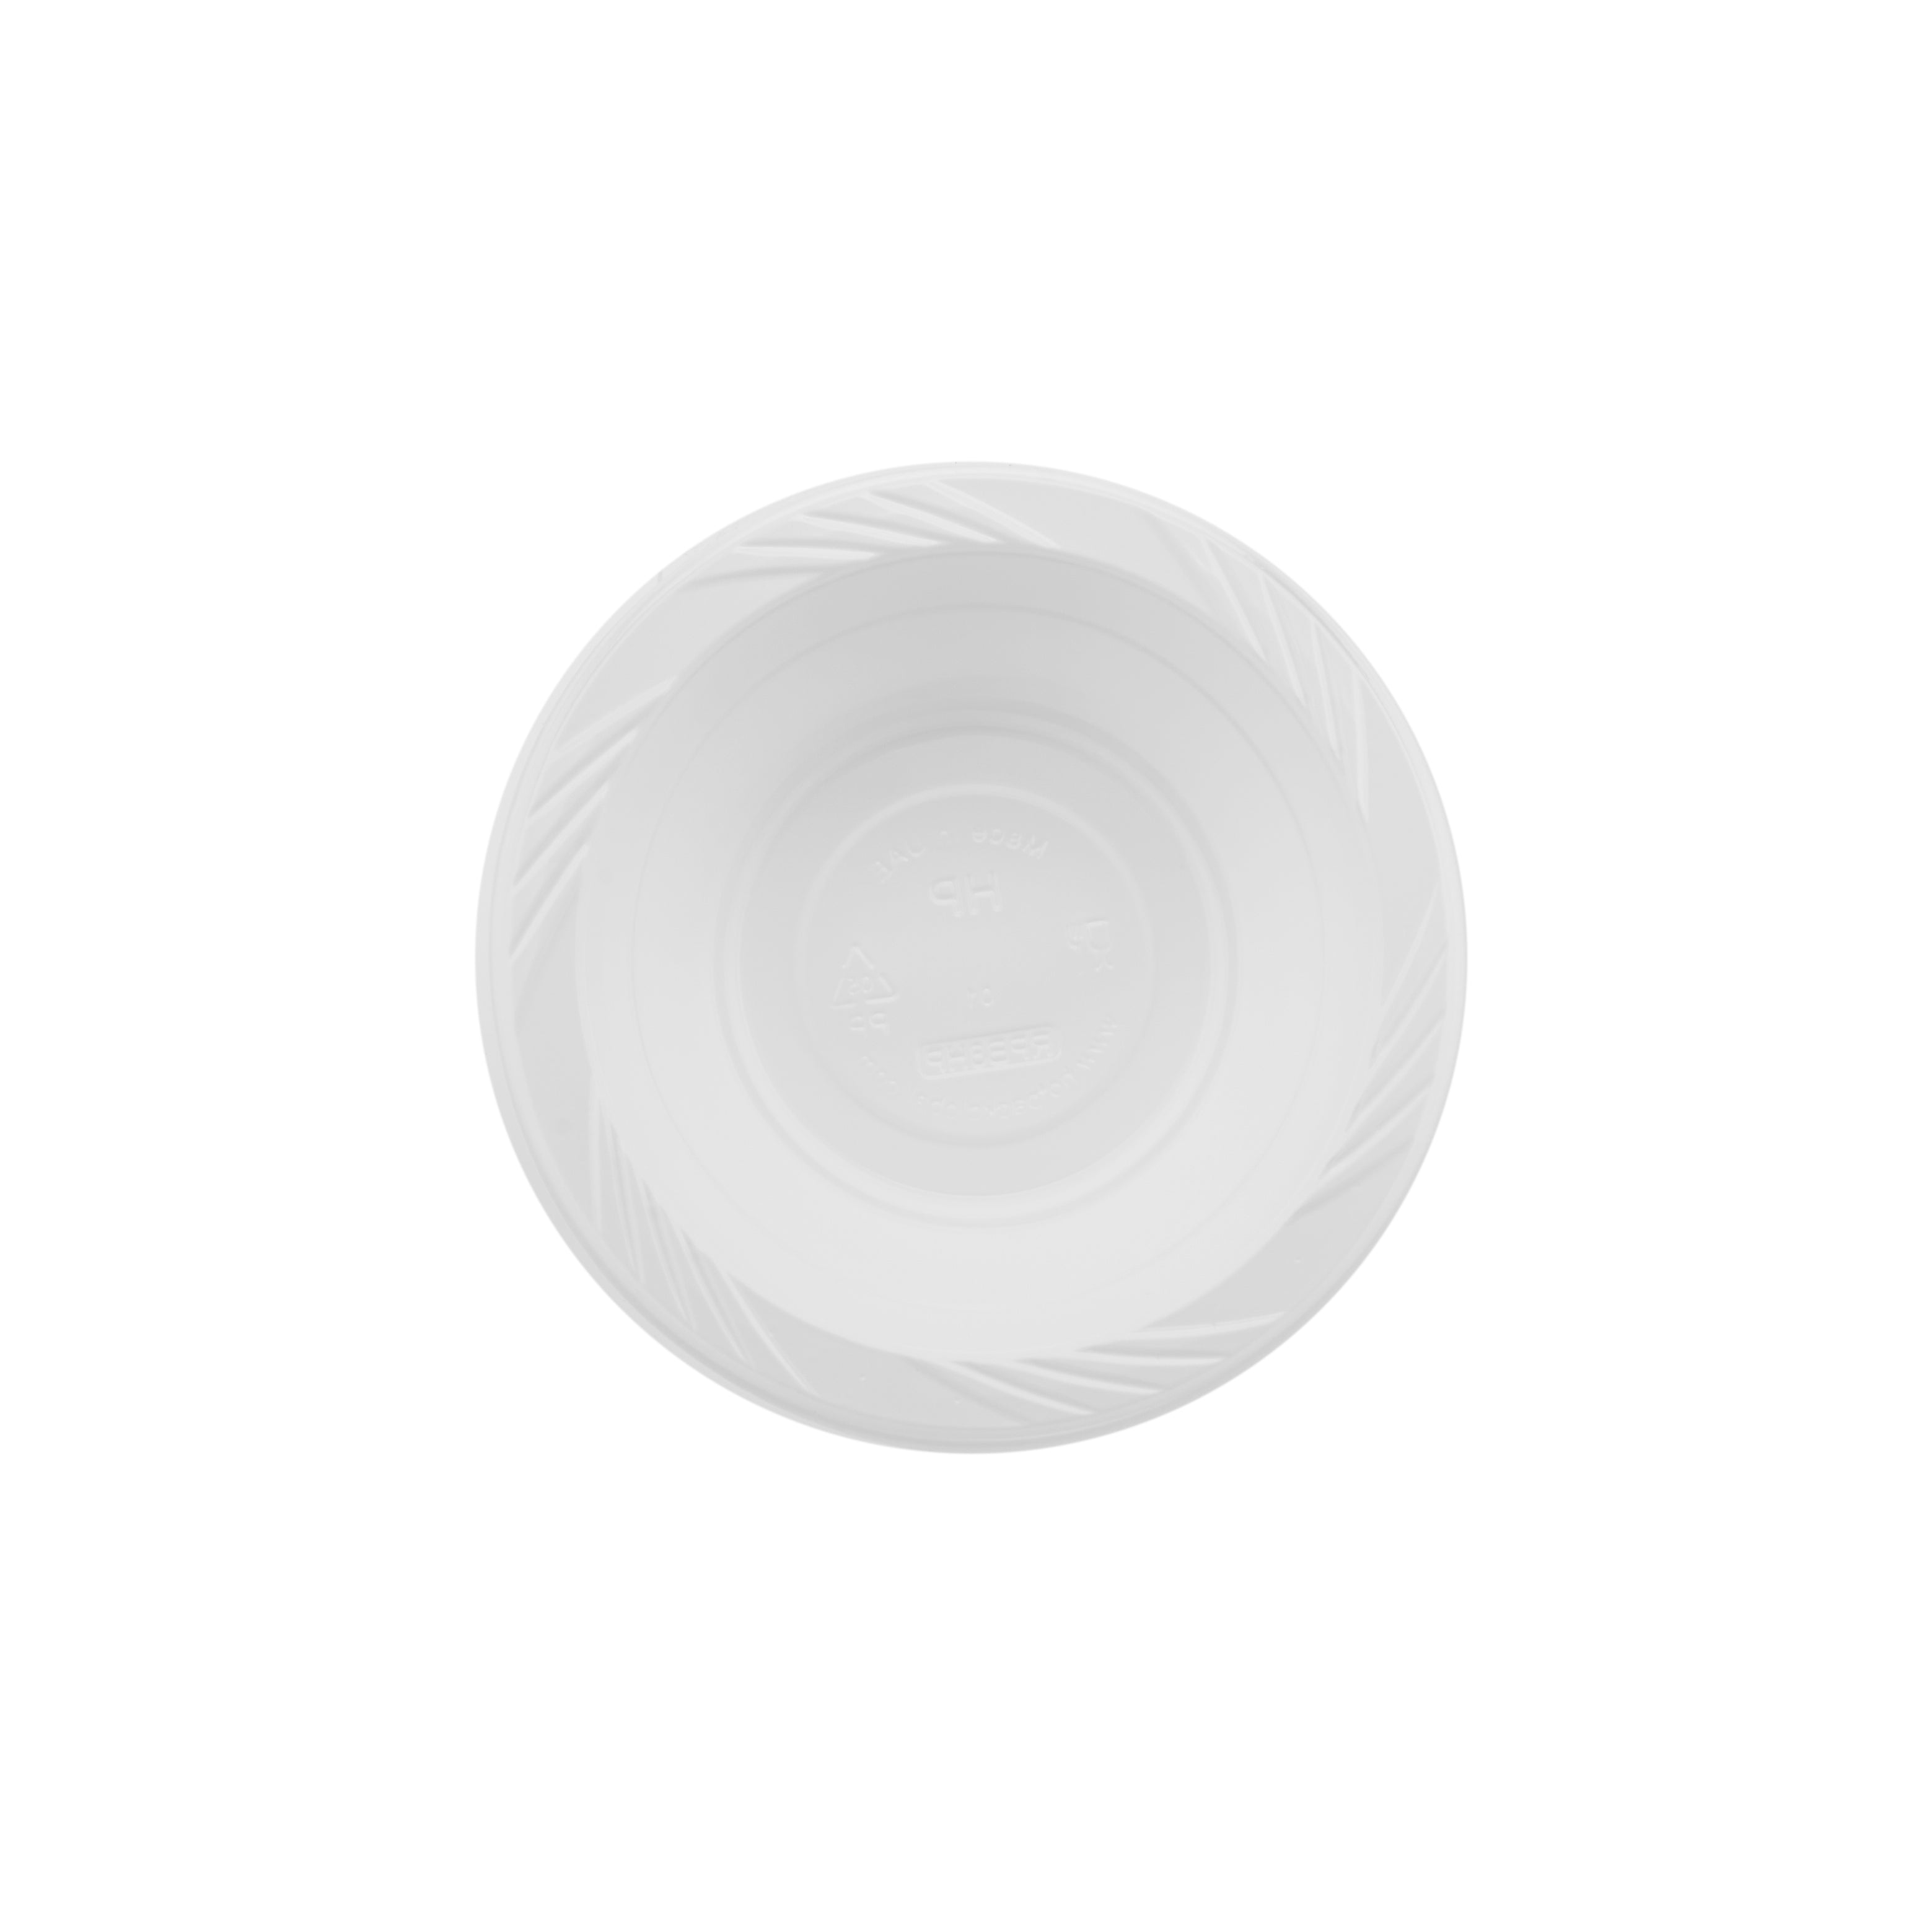 50 Pieces 10 Oz  White Plastic Bowl